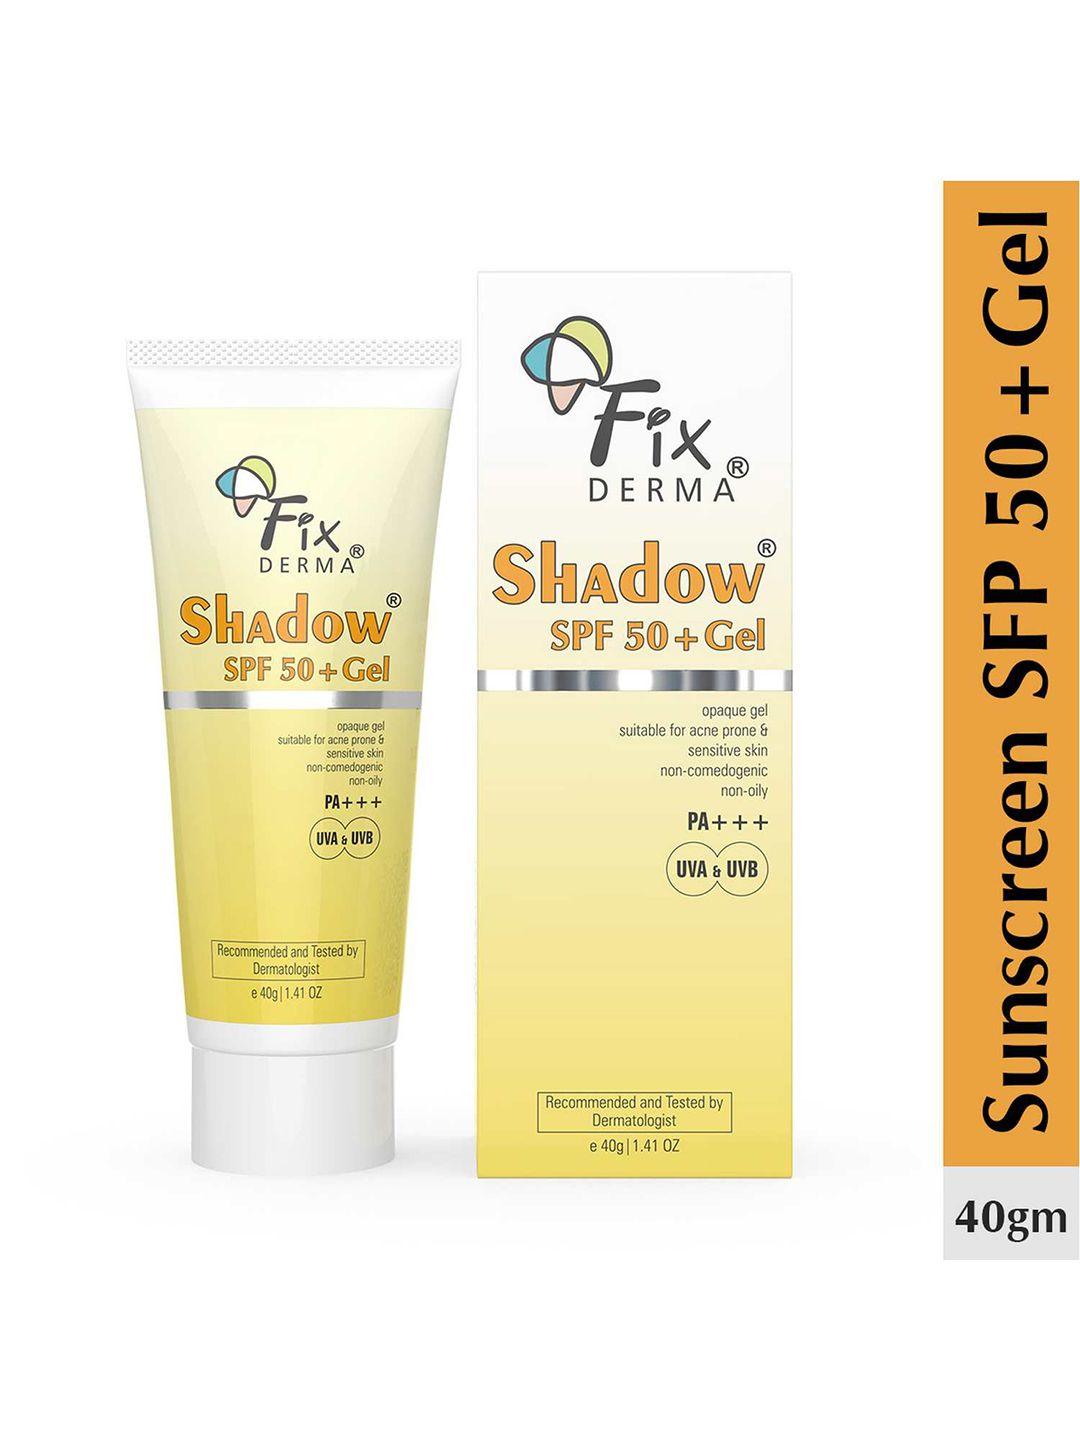 fixderma shadow spf 50+ uva & uvb protection gel sunscreen - 40 g